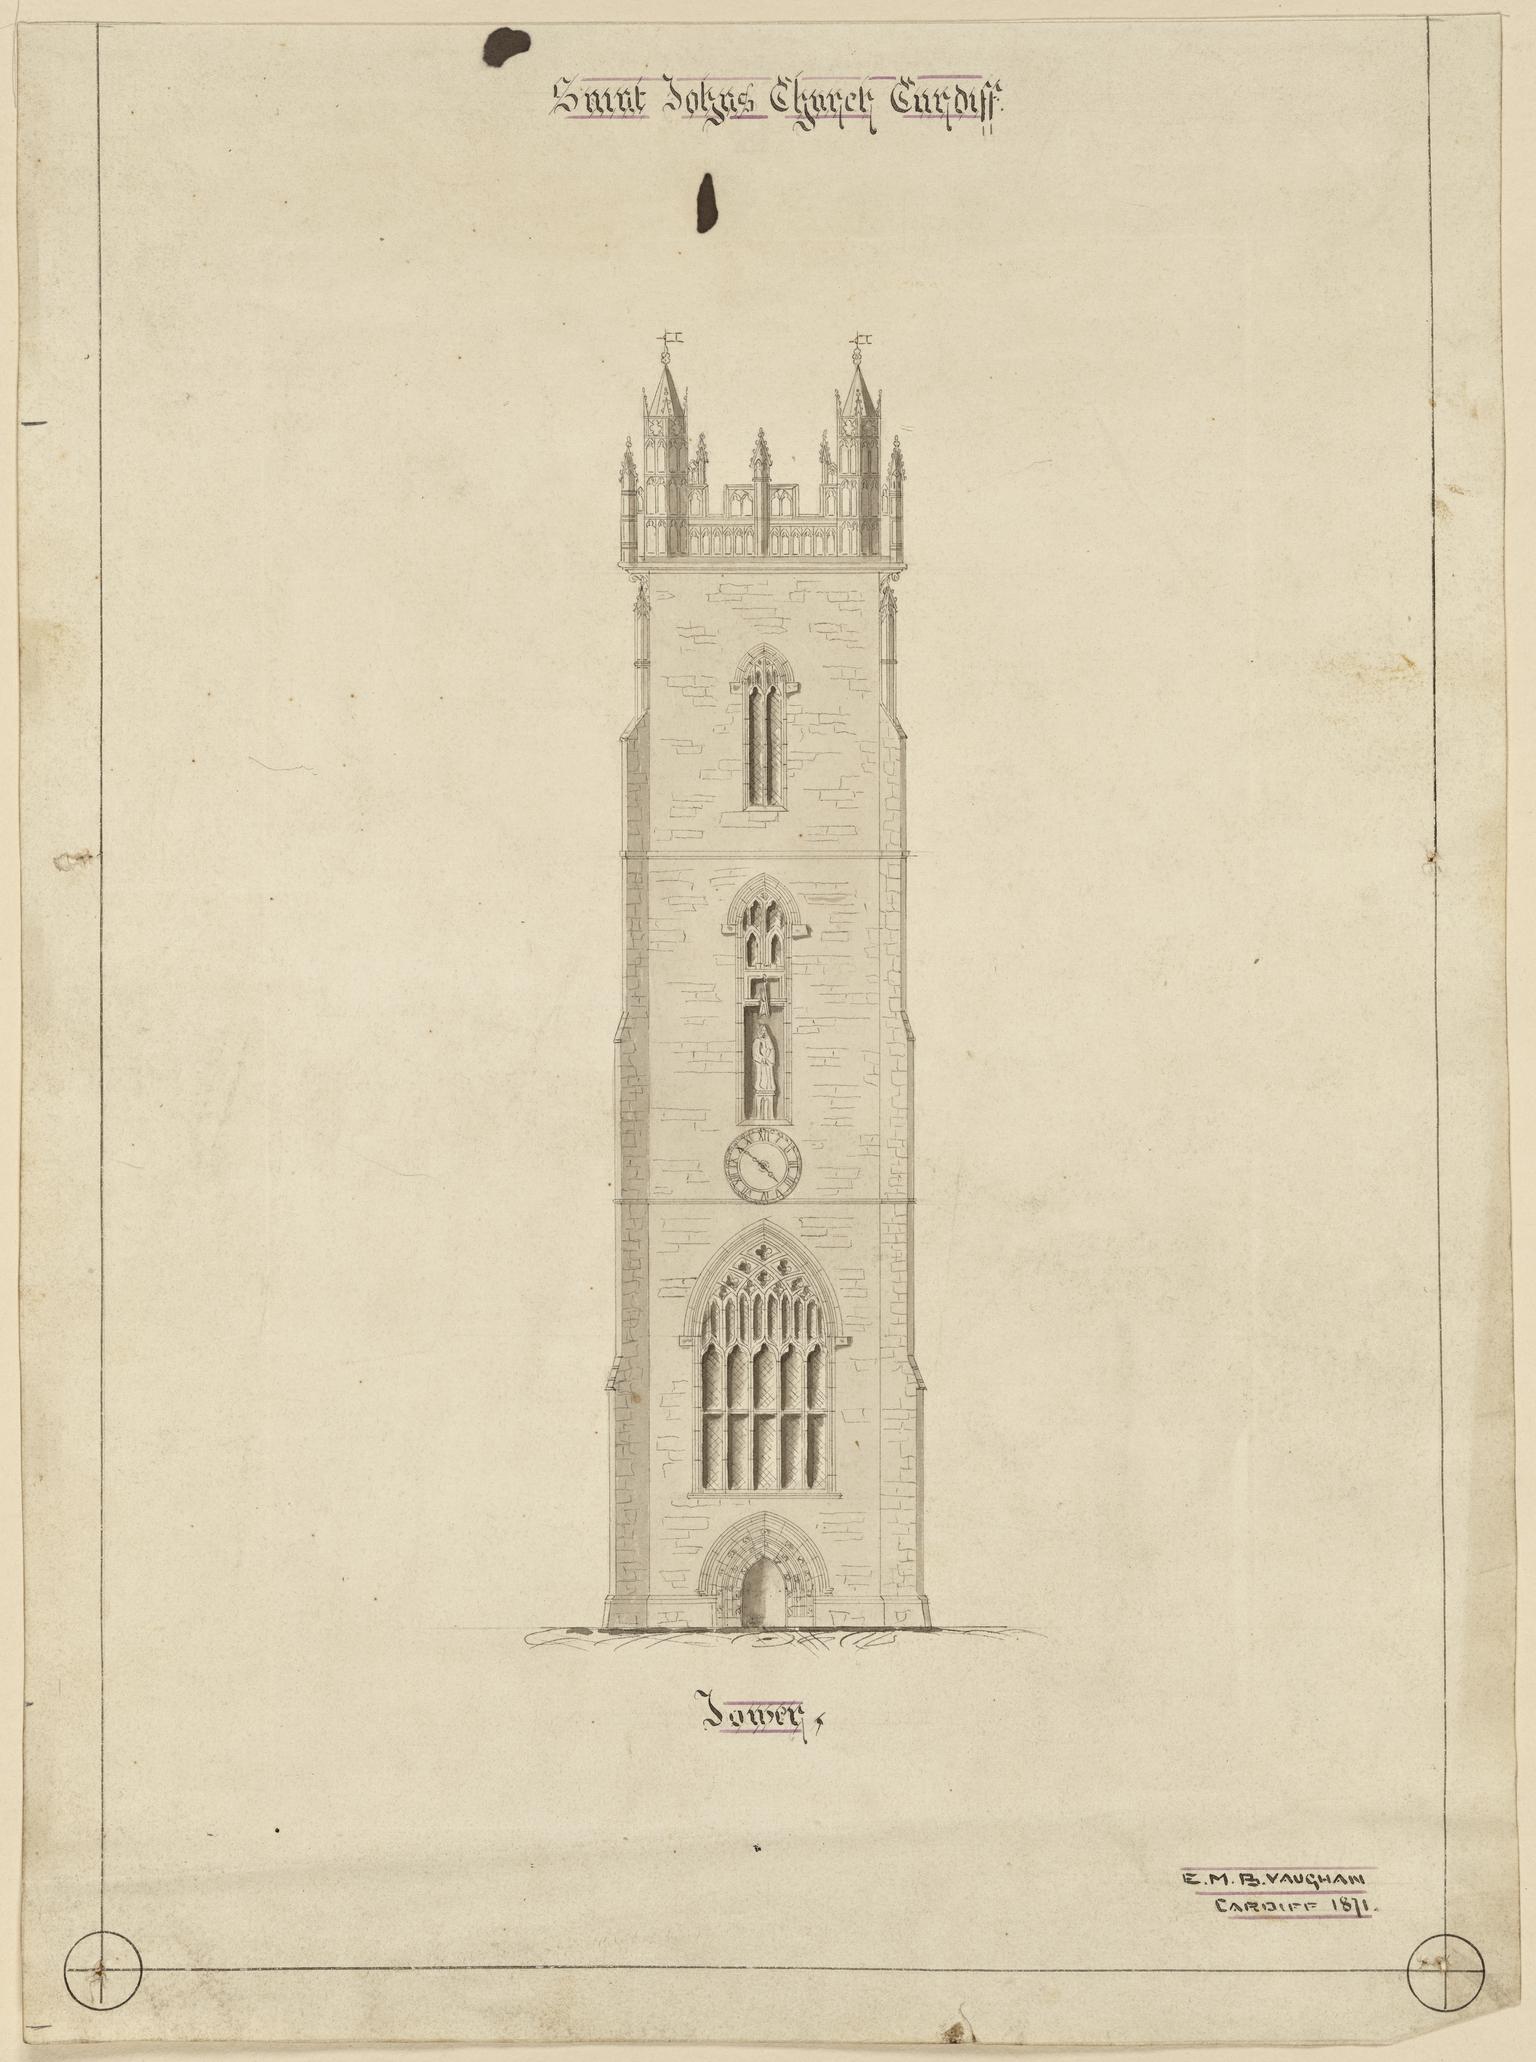 Tower of St John's Church, Cardiff